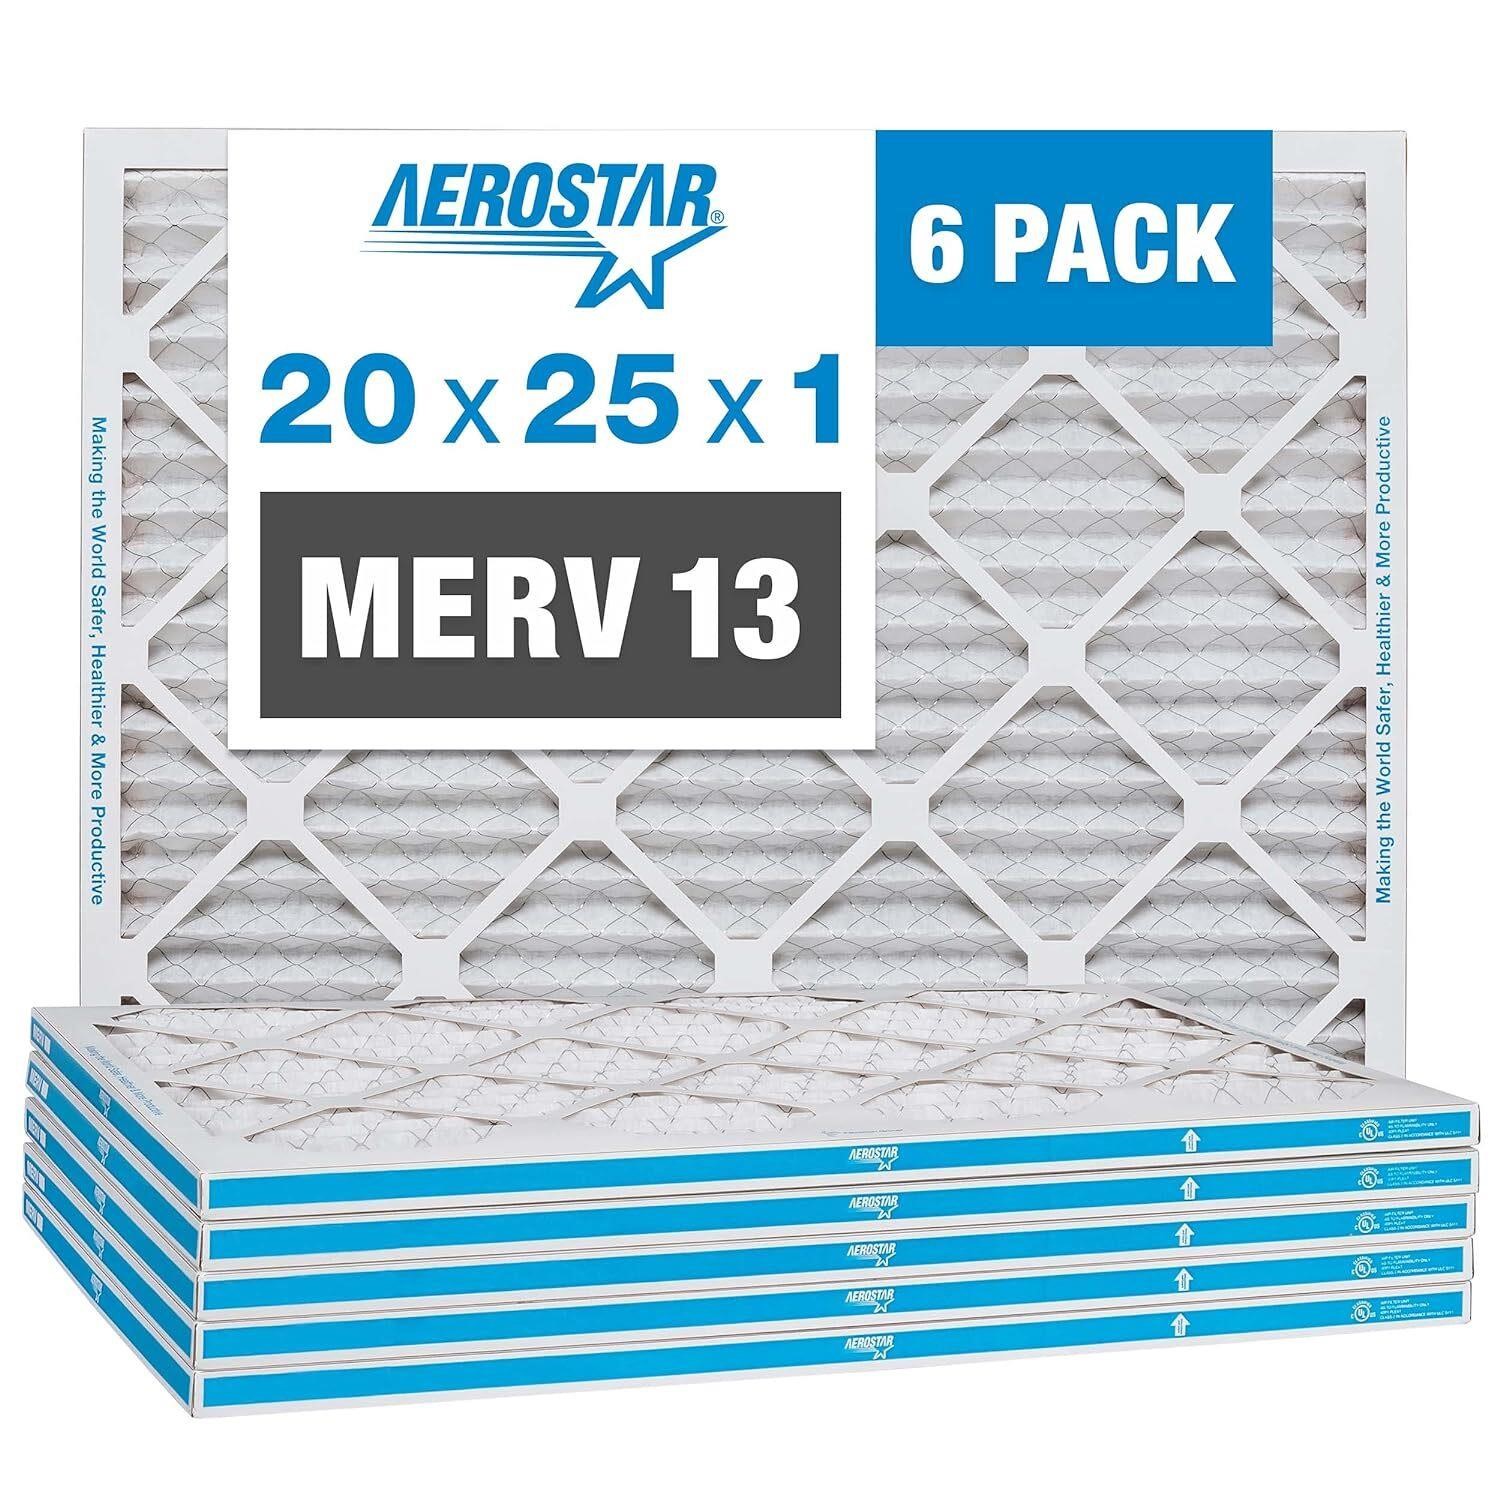 Aerostar 20x25x1 MERV 13 Air Filter  6 Pack